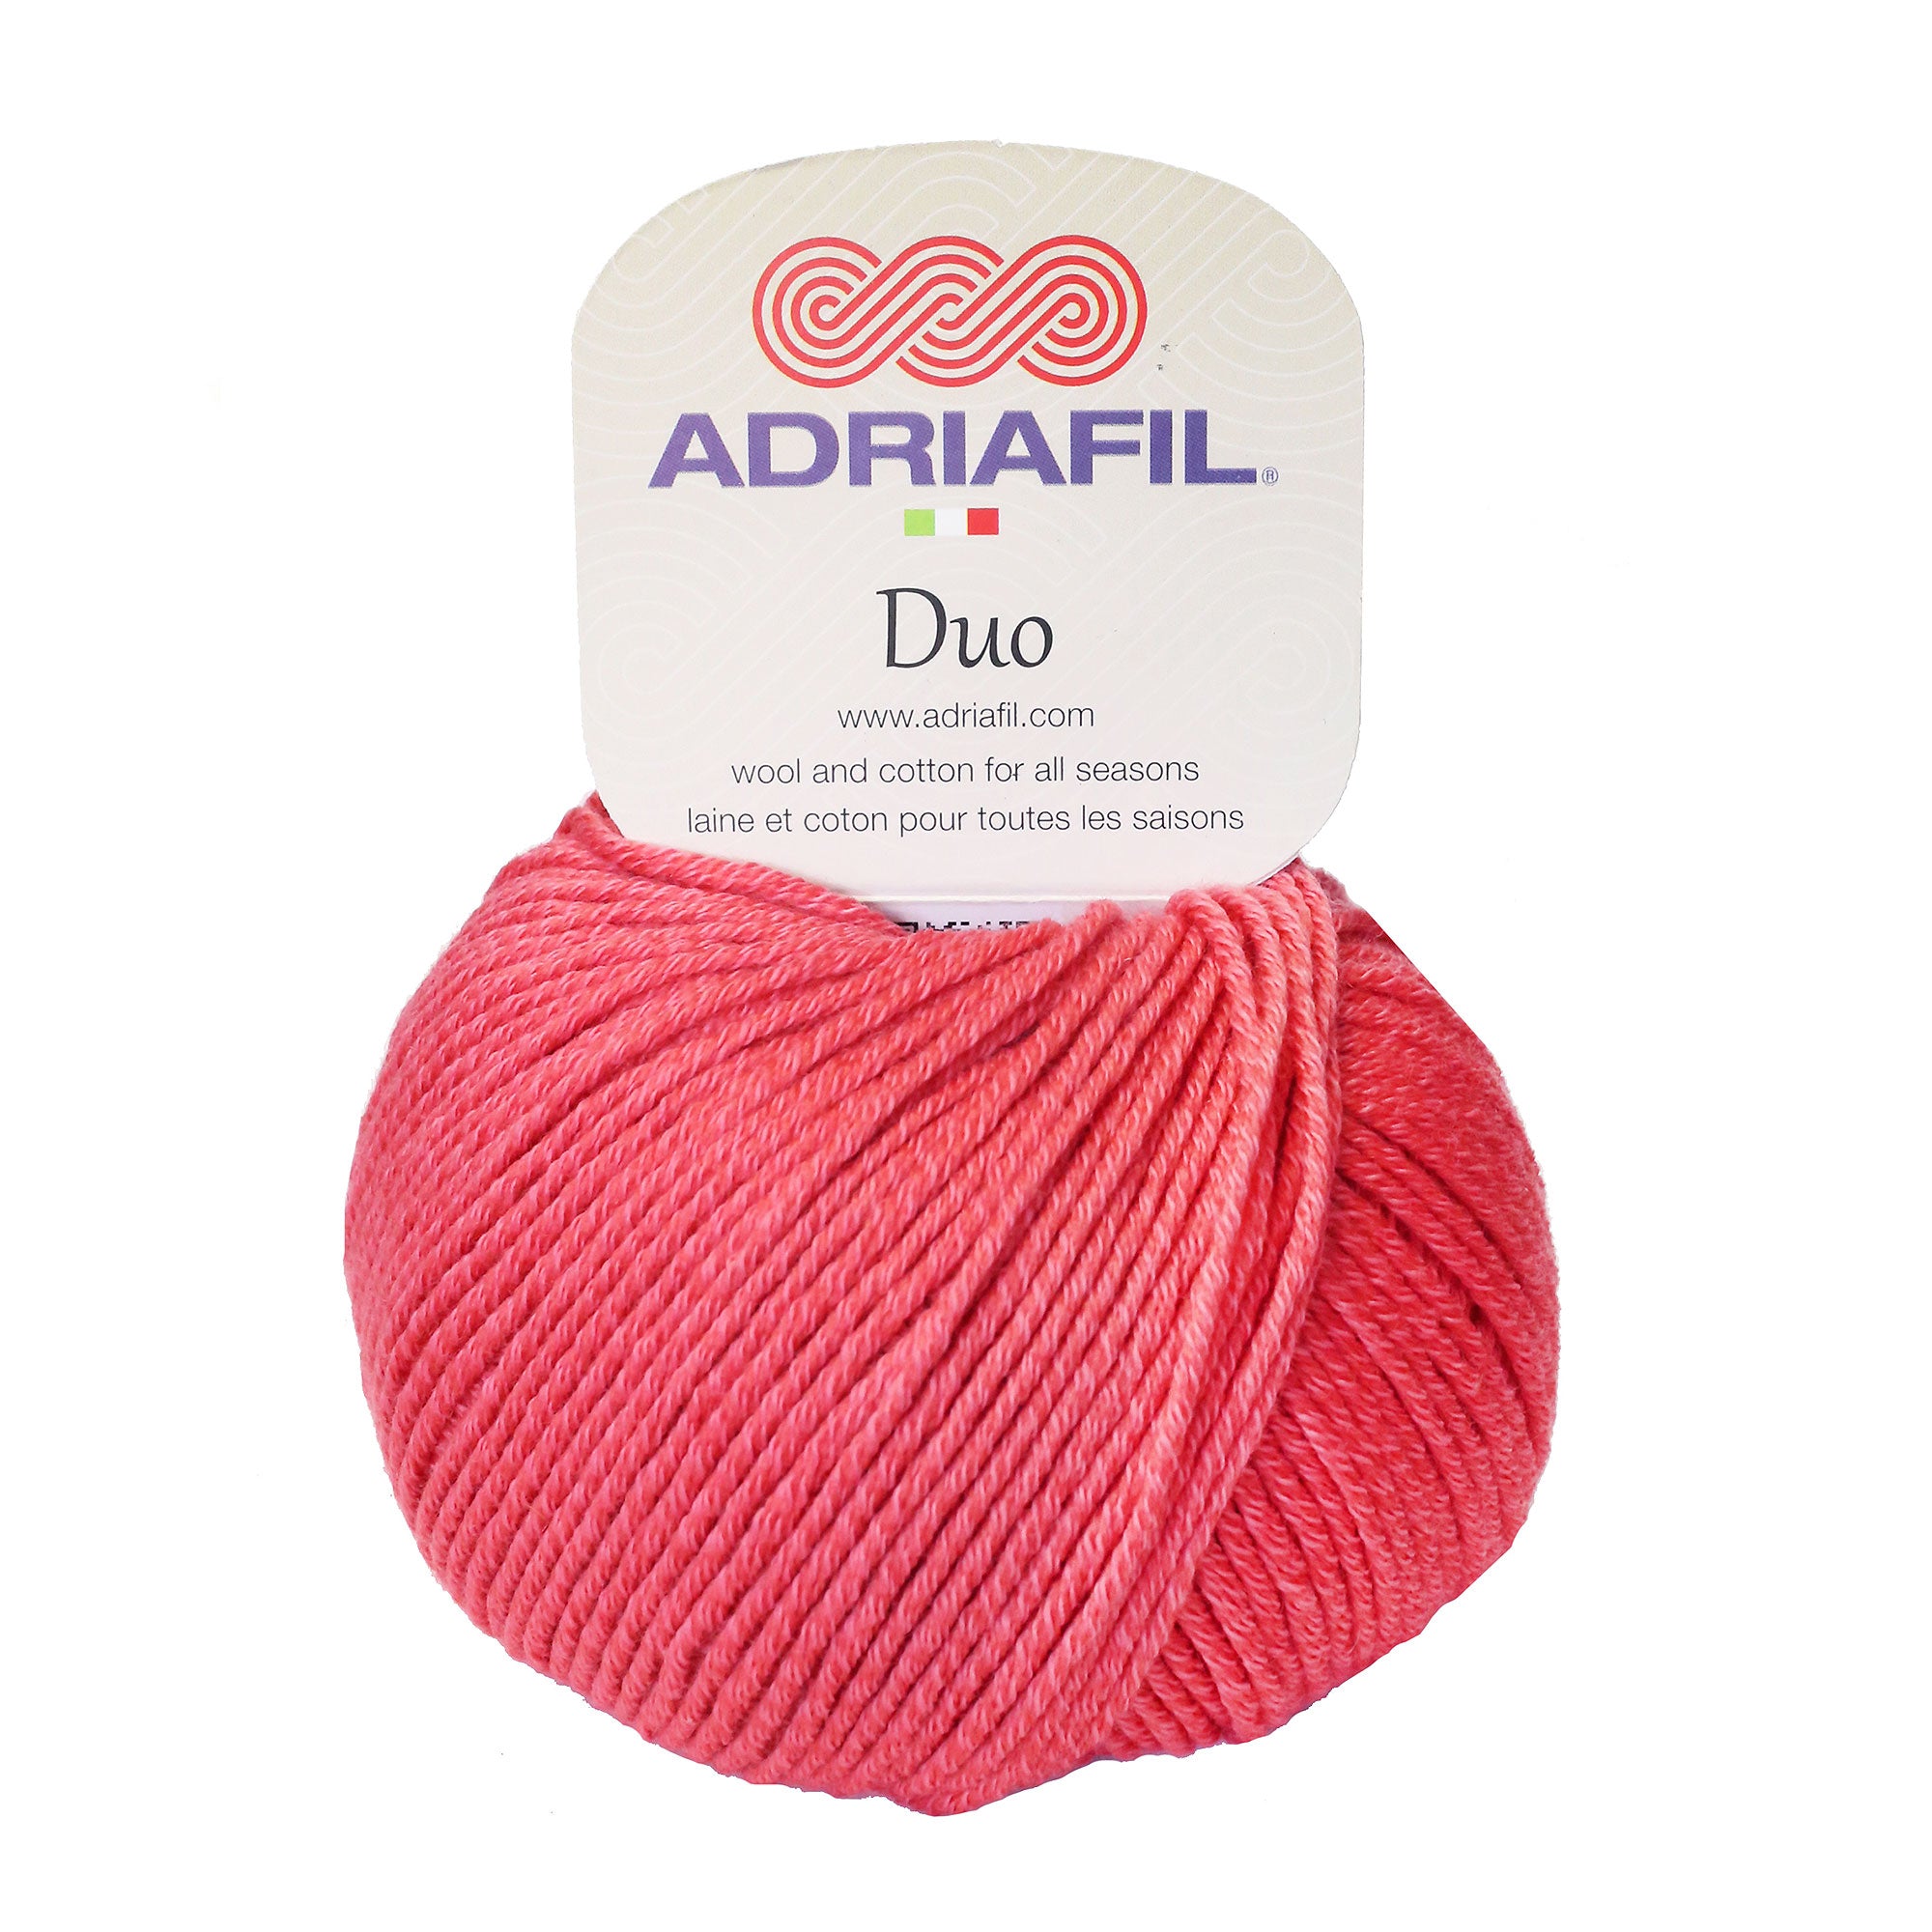 Adriafil Duo Comfort Extra Fine Merino & Egyptian Cotton DK - Vermilion 51